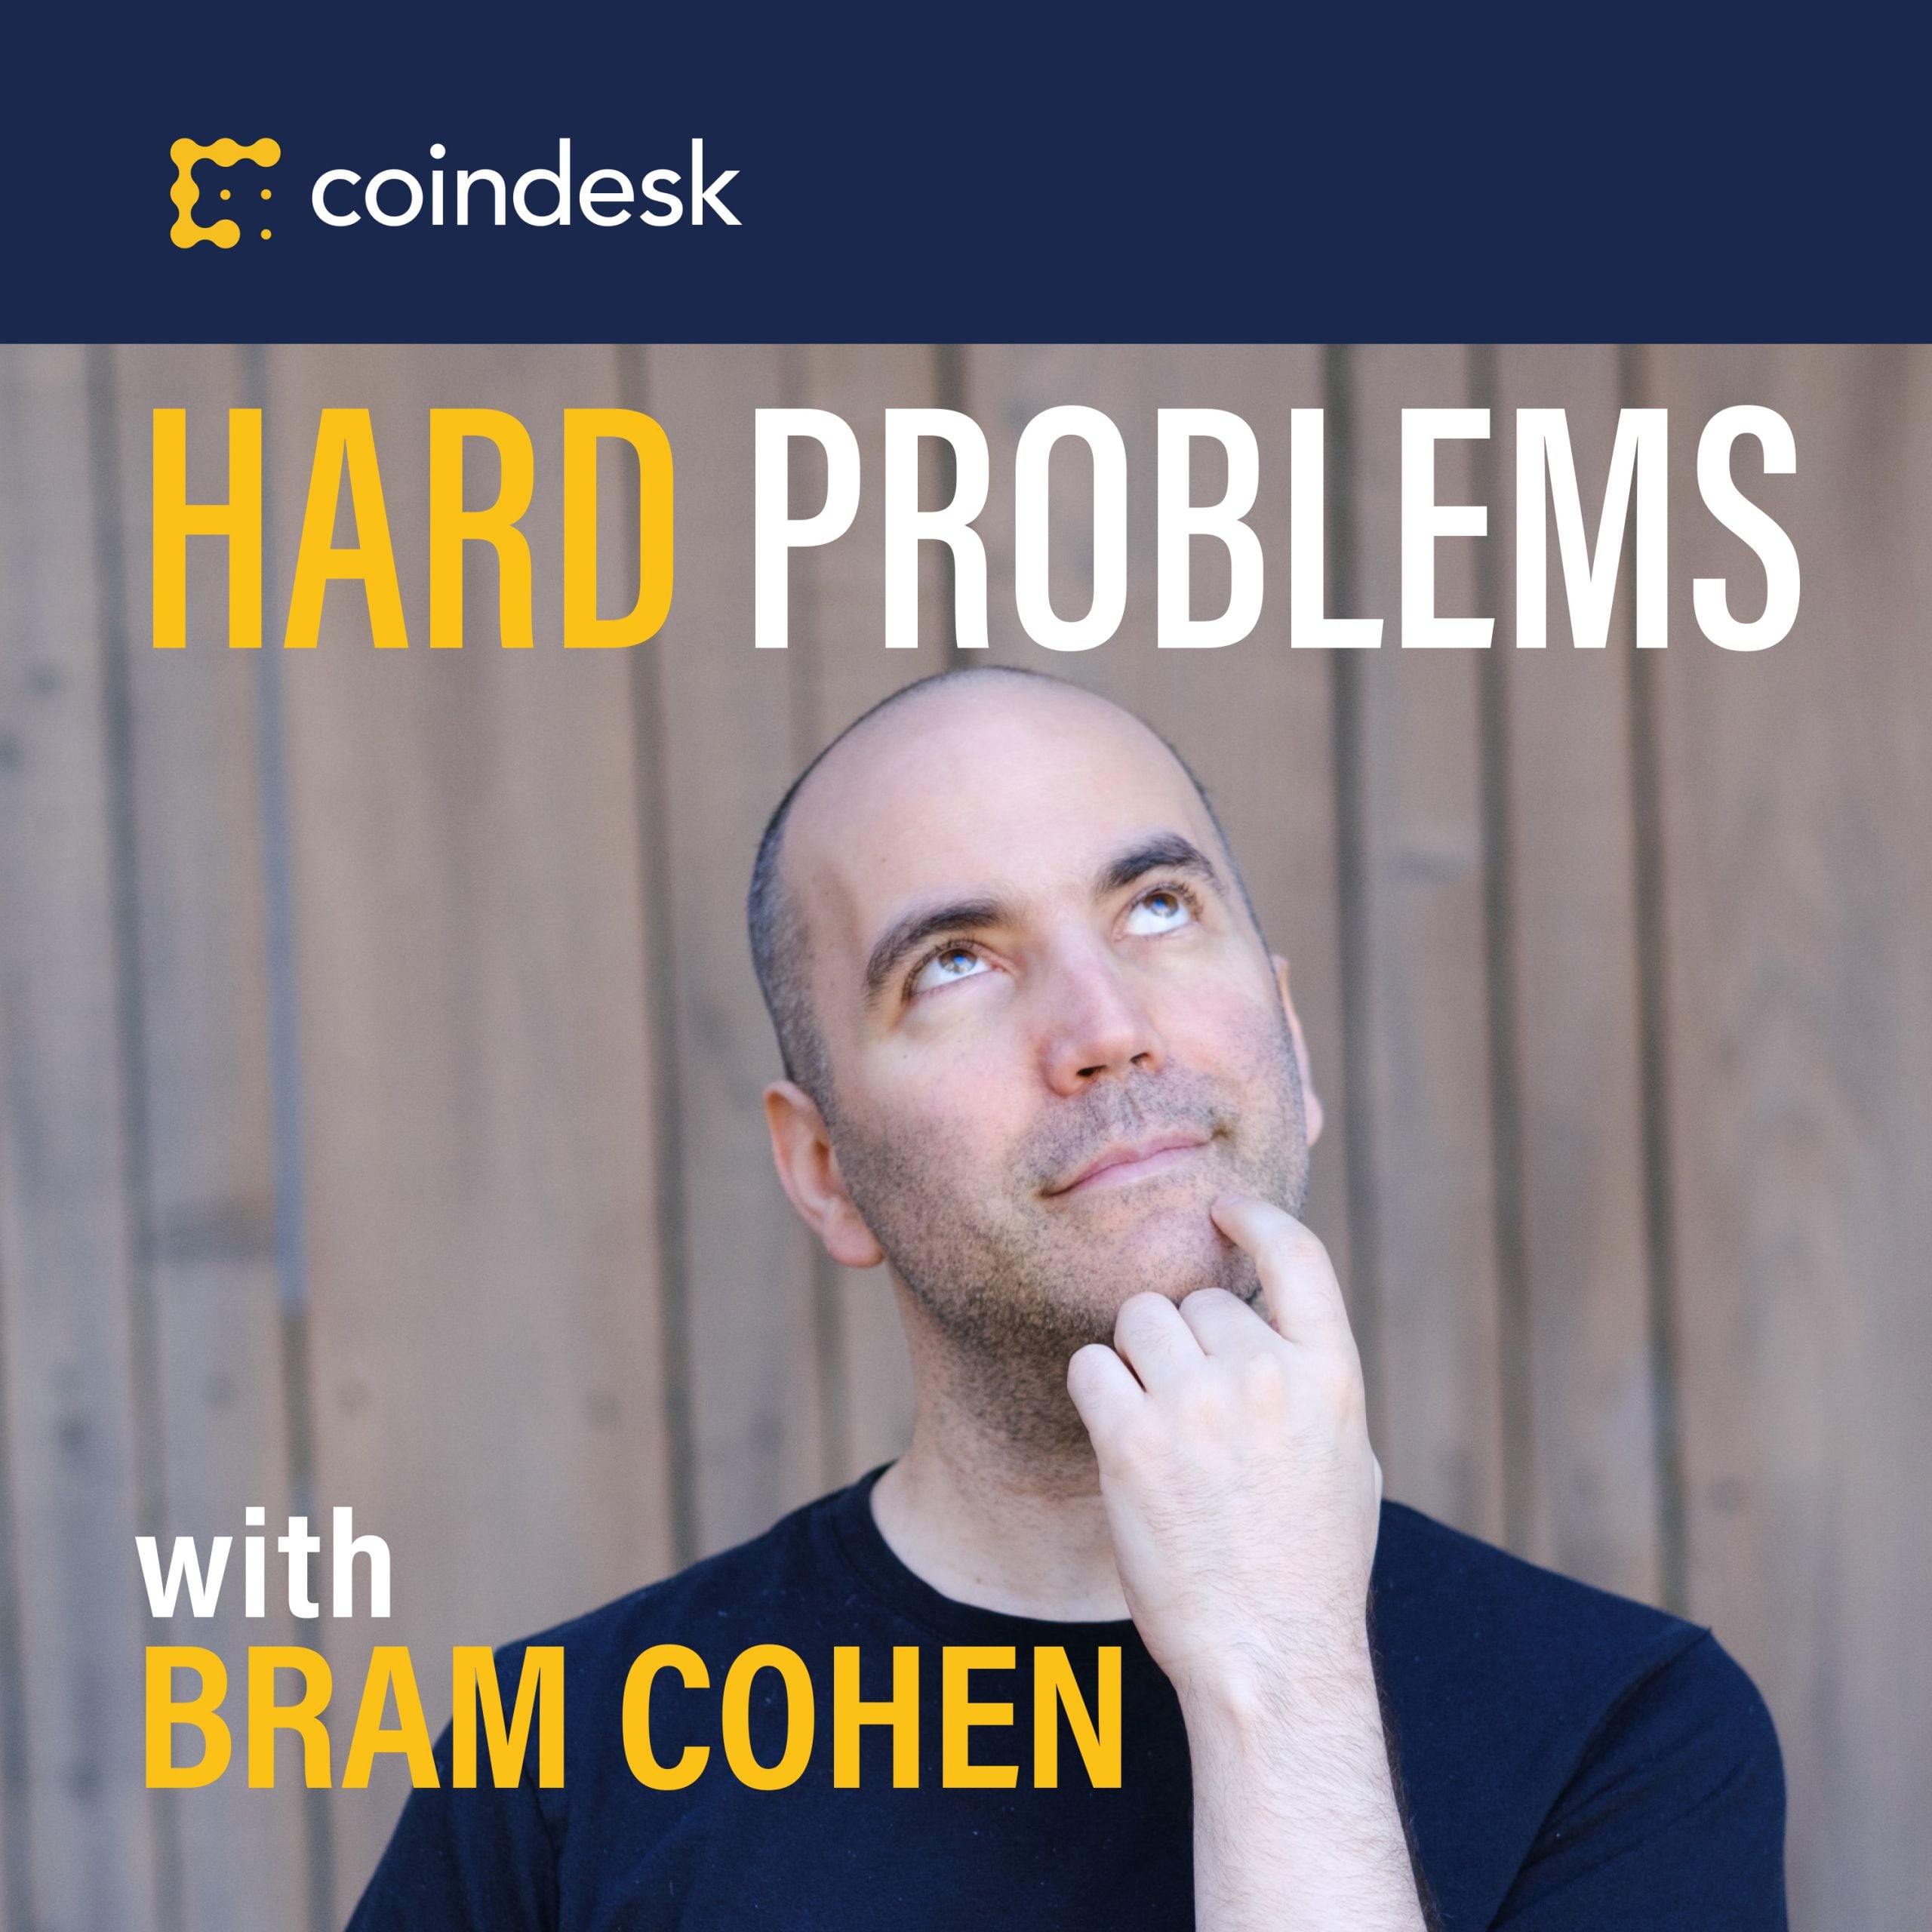 Inside Bram Cohen’s Proof-of-Work Reinvention